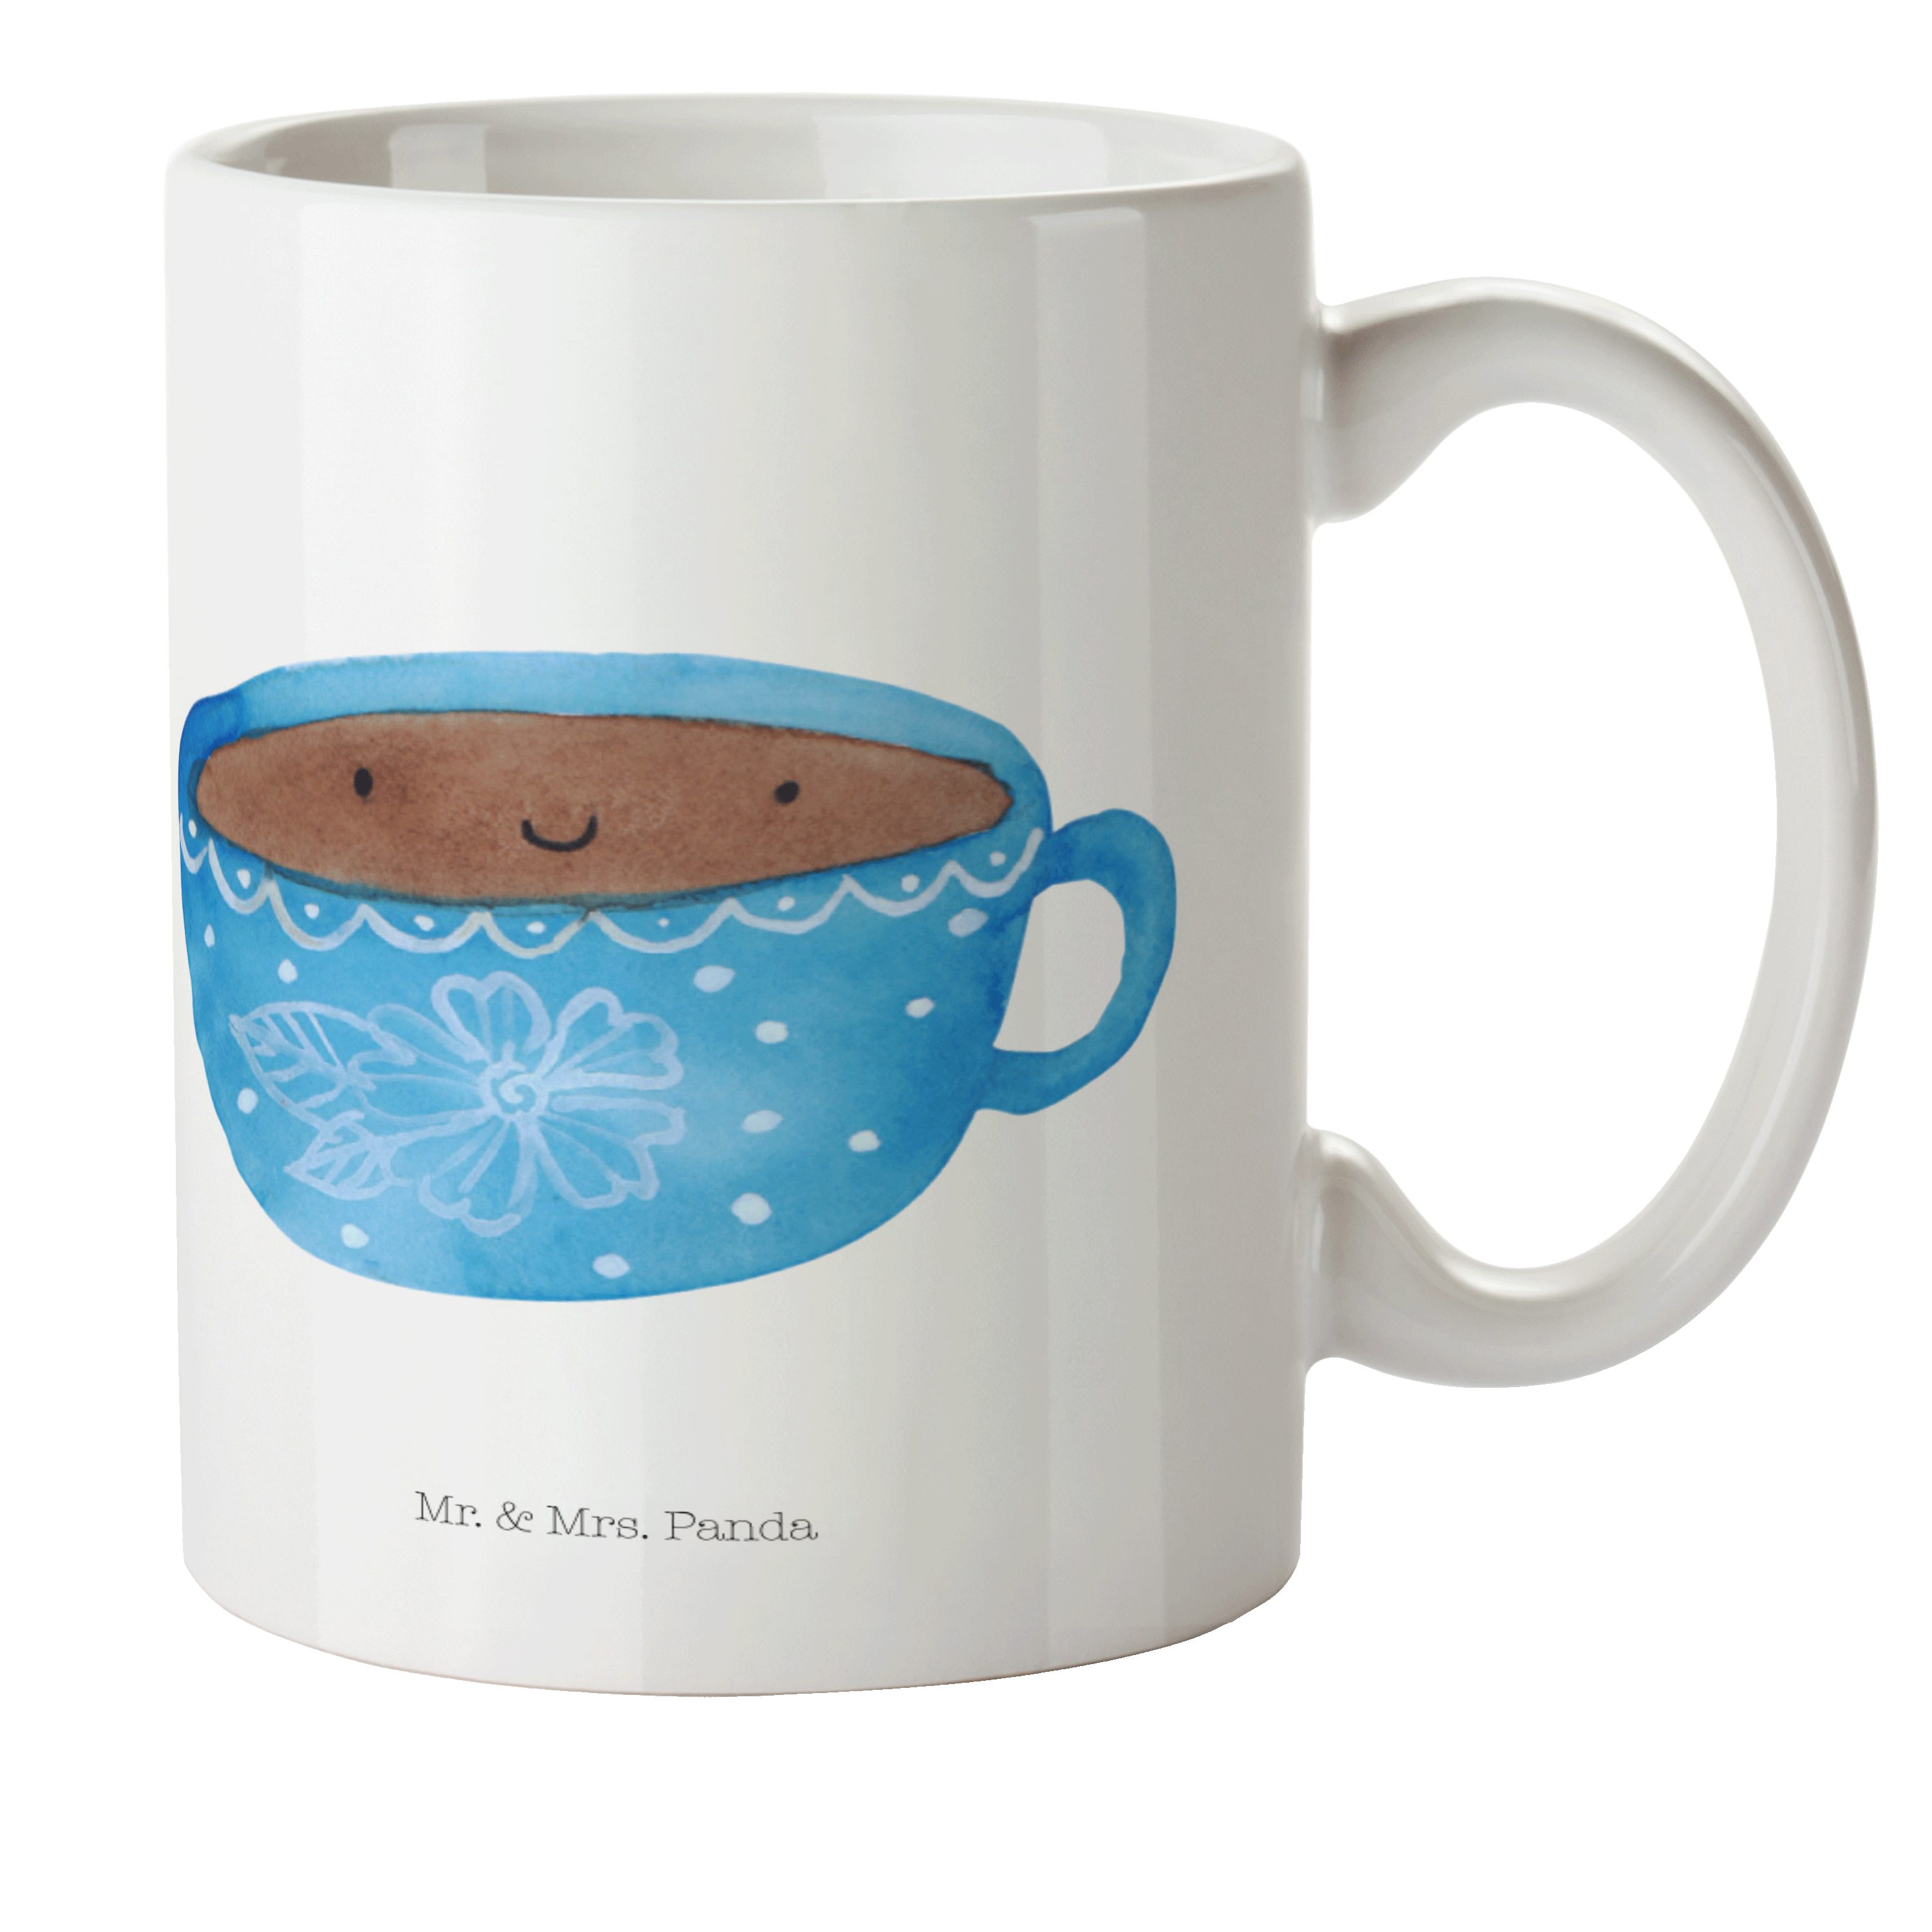 Mr. & Mrs. Panda Kinderbecher Kaffee Tasse - Weiß - Geschenk, Kindergartenbecher, Liebe, Kinderbech, Kunststoff